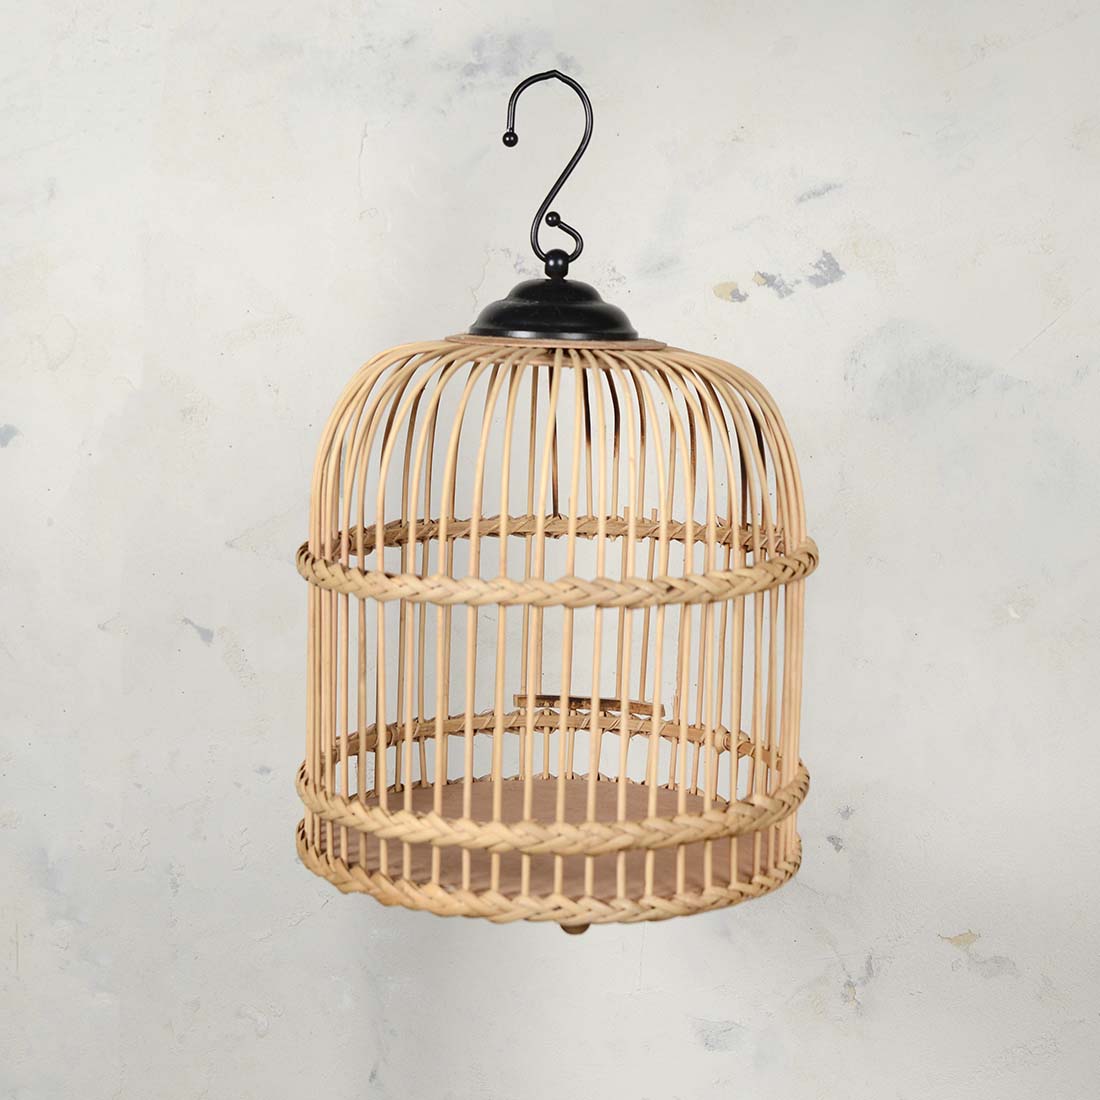 Decorative Bamboo Birdcage - Cracker Barrel